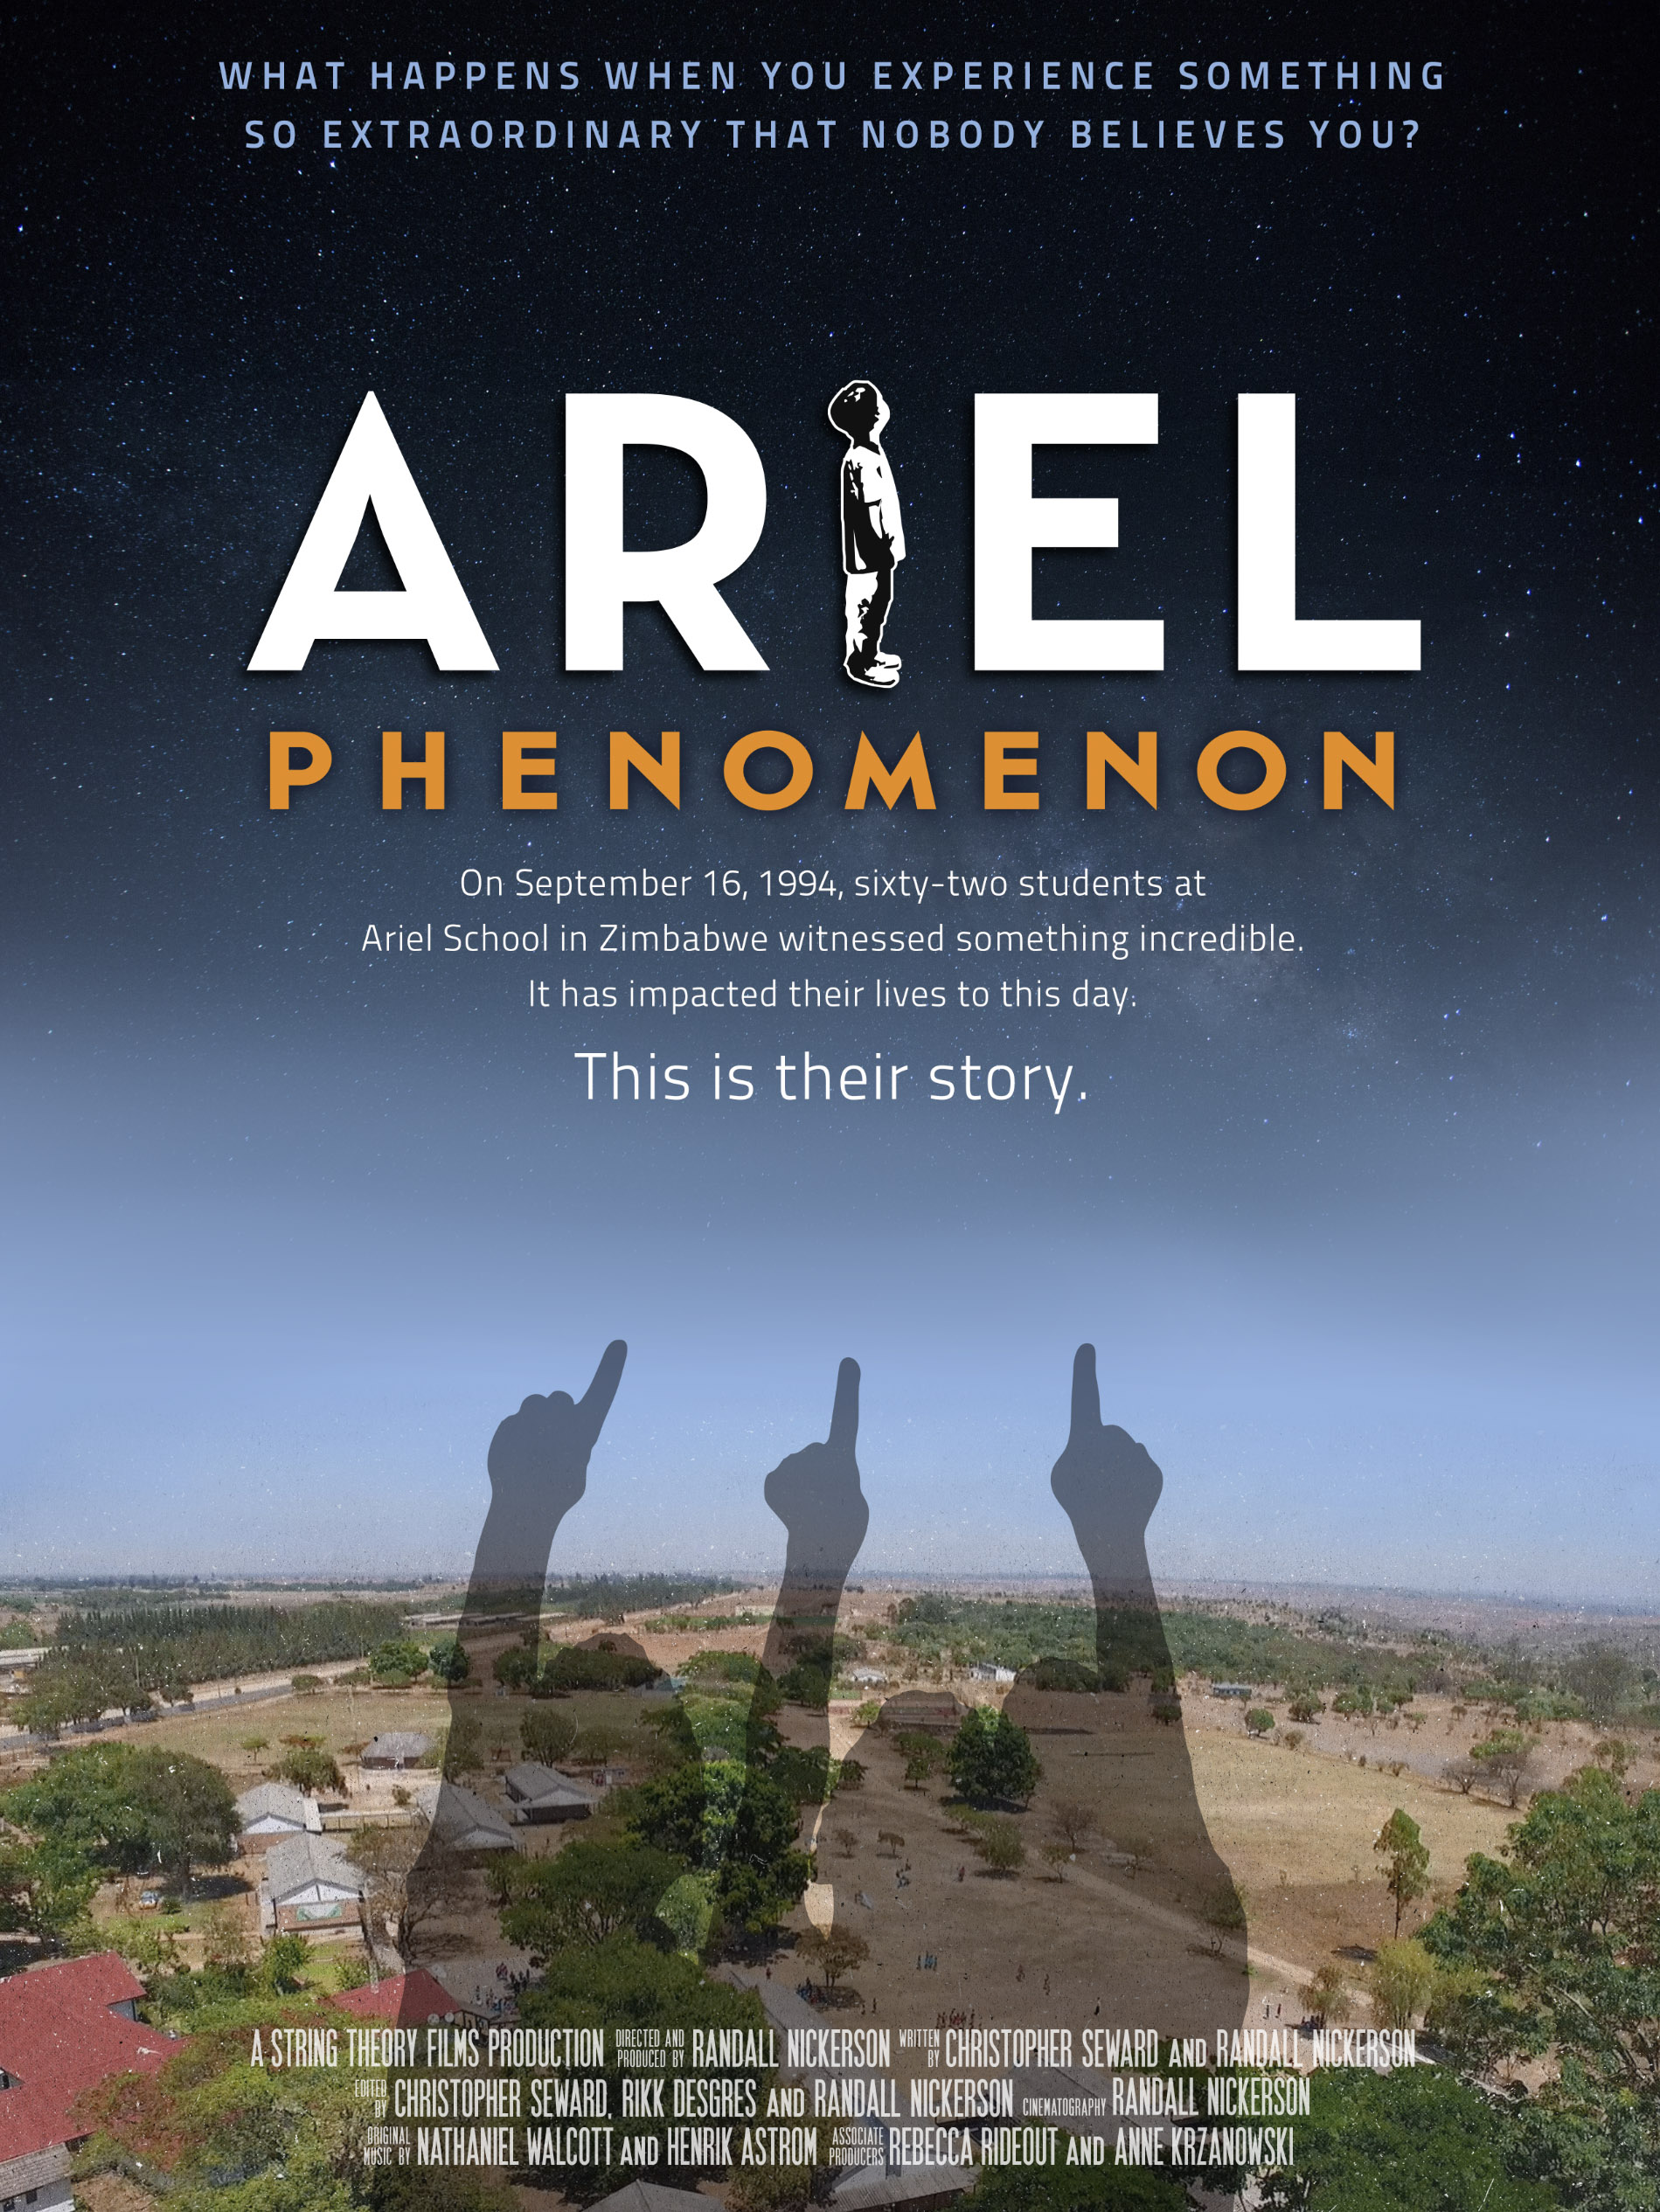 Nonton film Ariel Phenomenon layarkaca21 indoxx1 ganool online streaming terbaru